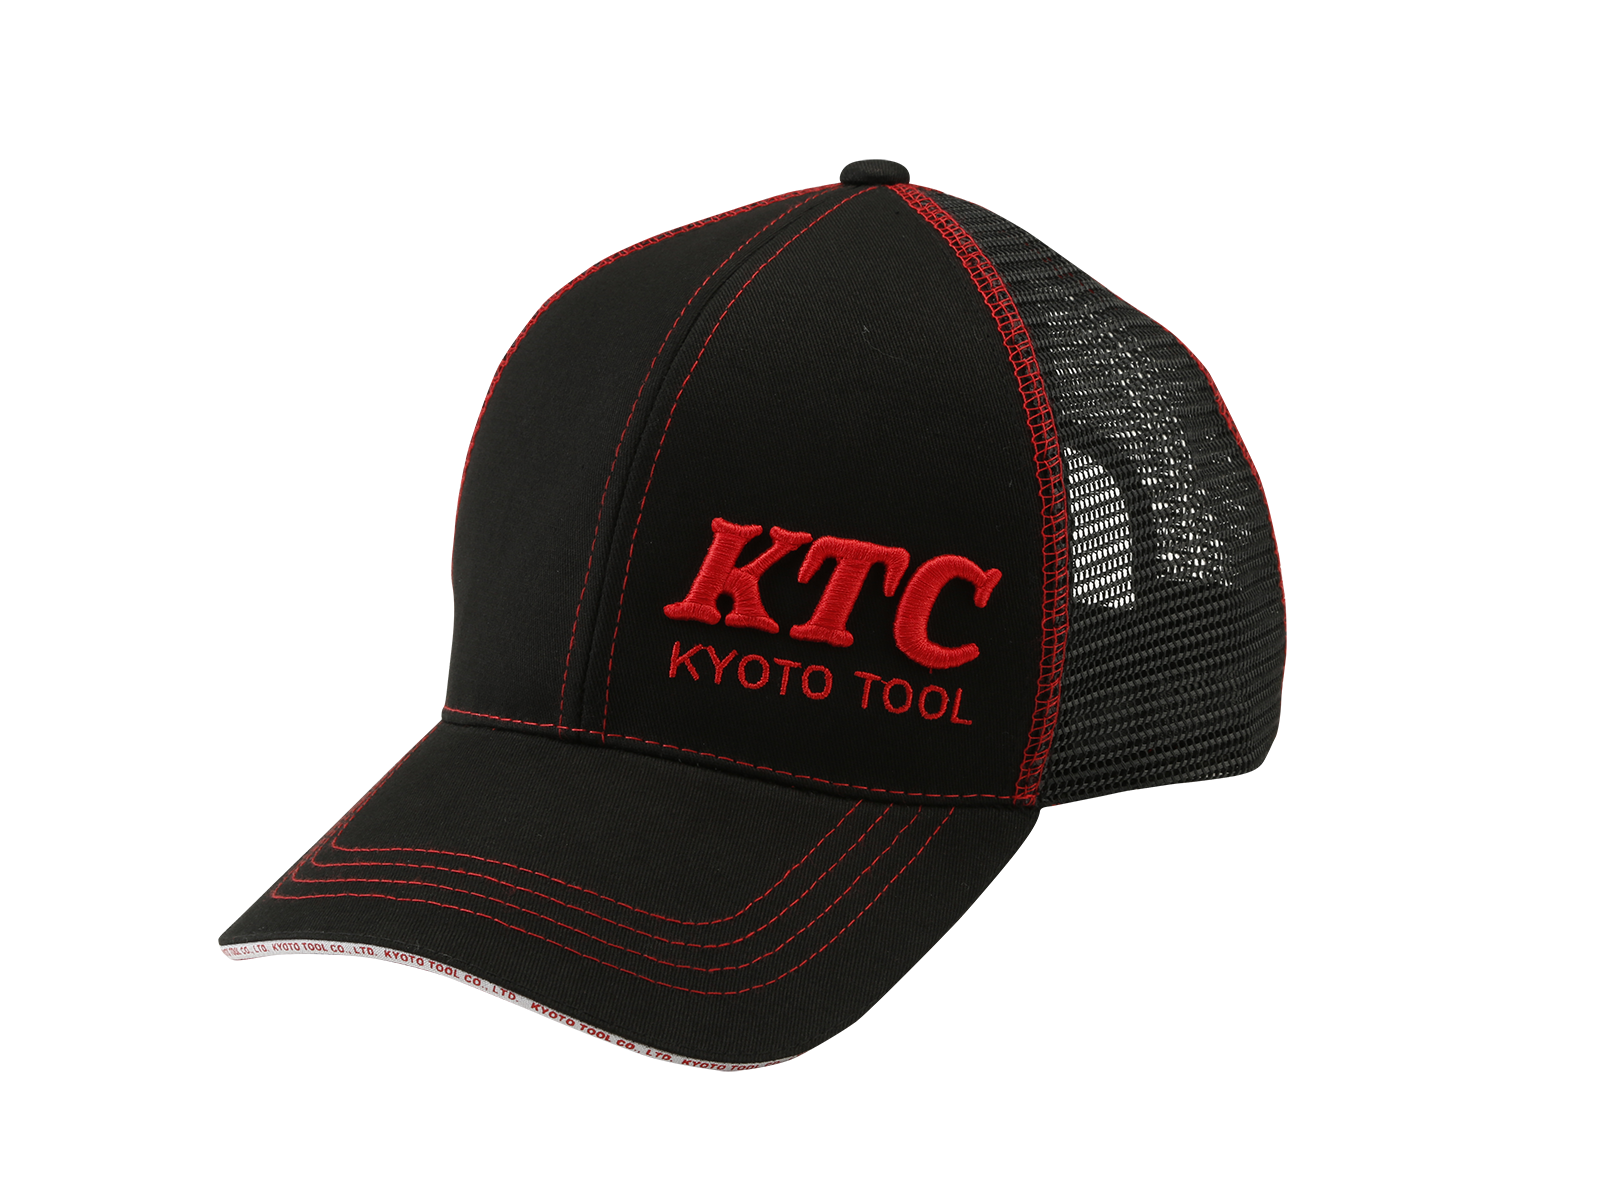 KTCオフィシャルグッズ「ネプロススエードキャップ」および「KTCメッシュキャップ」新発売 | KTCツールオフィシャルサイト